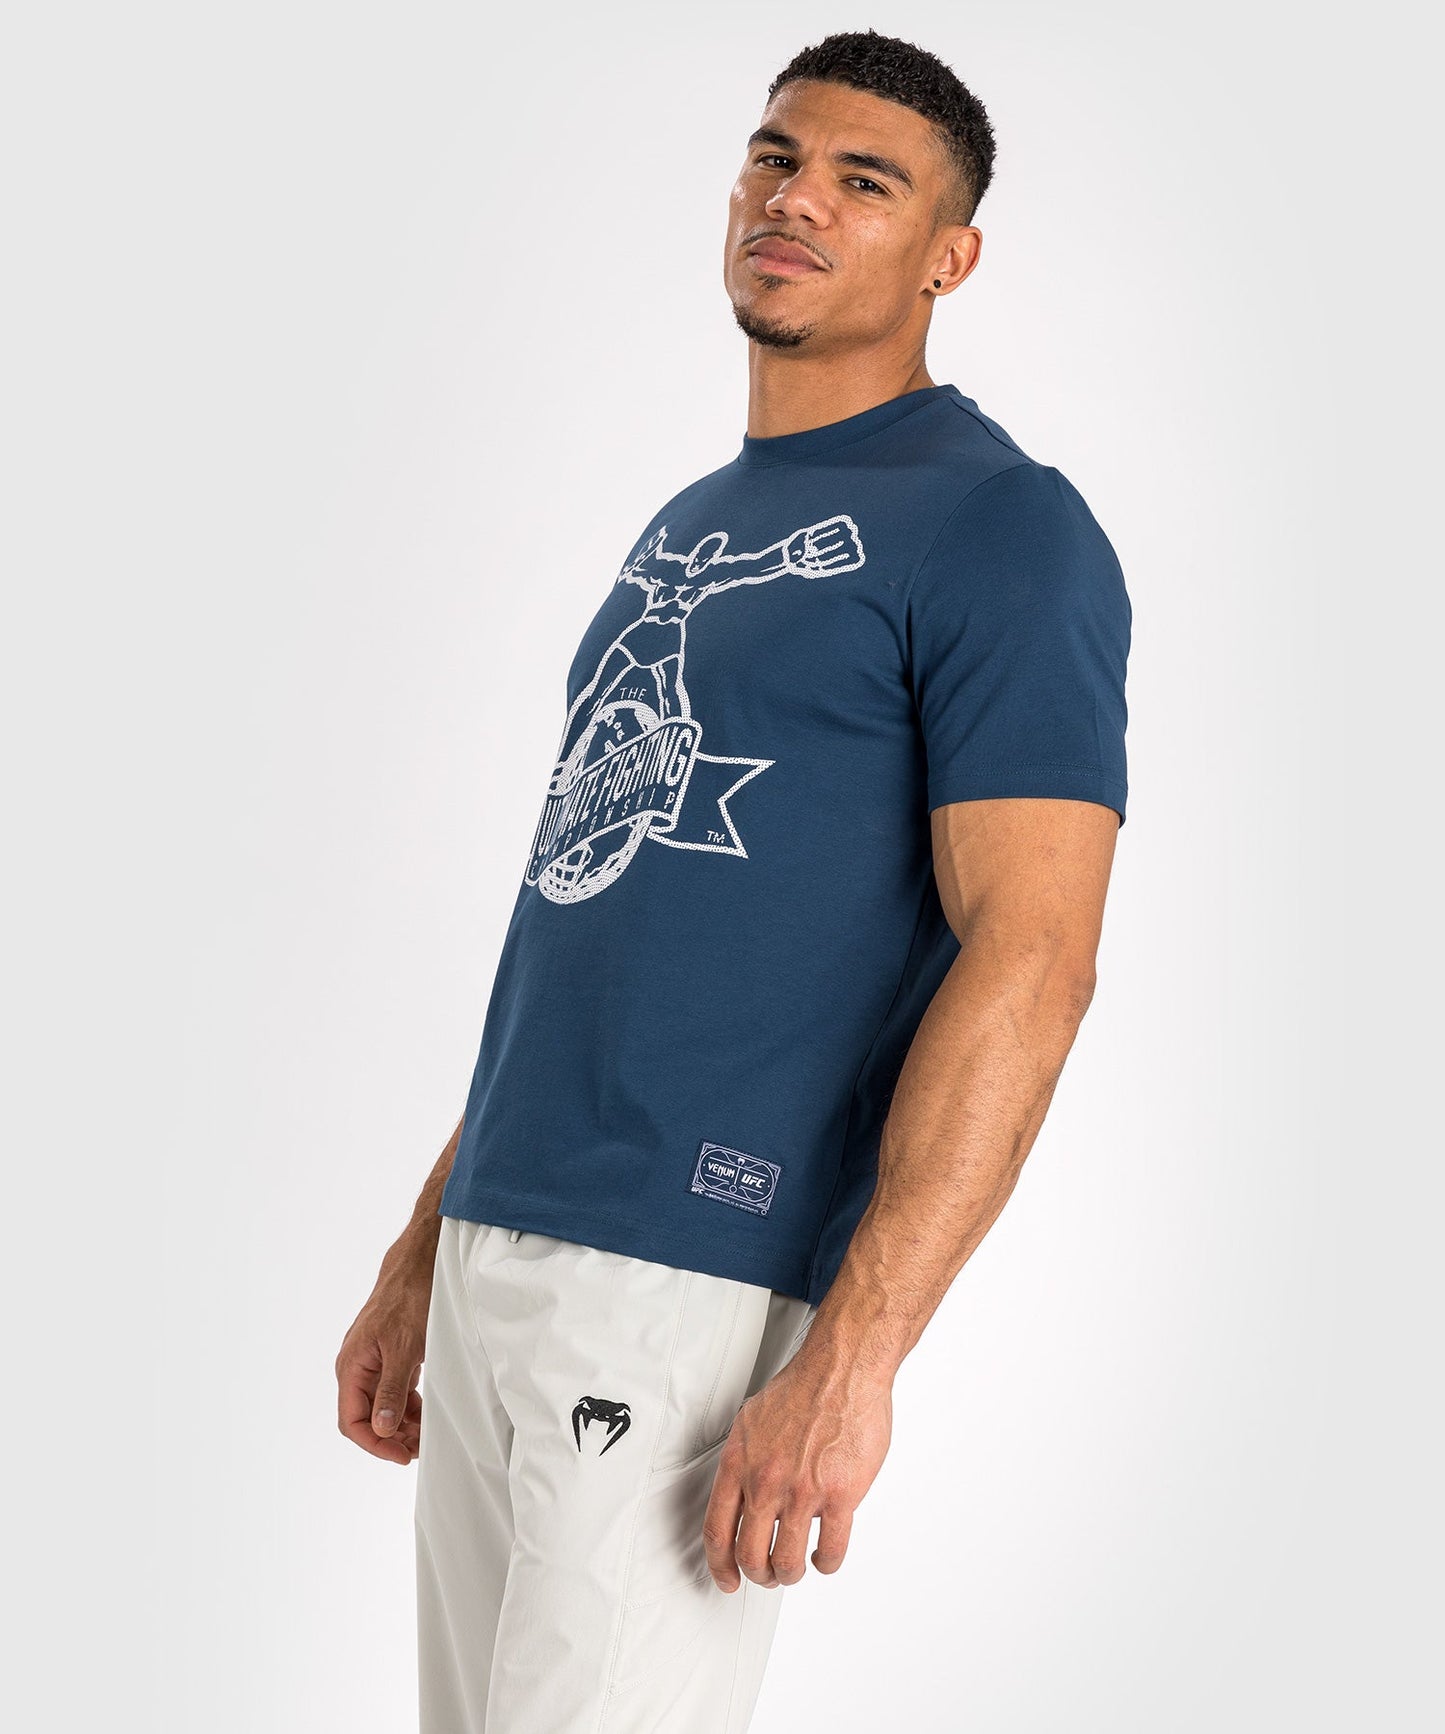 UFC by Venum Ulti-Man Camiseta - Azul Marino/Blanco